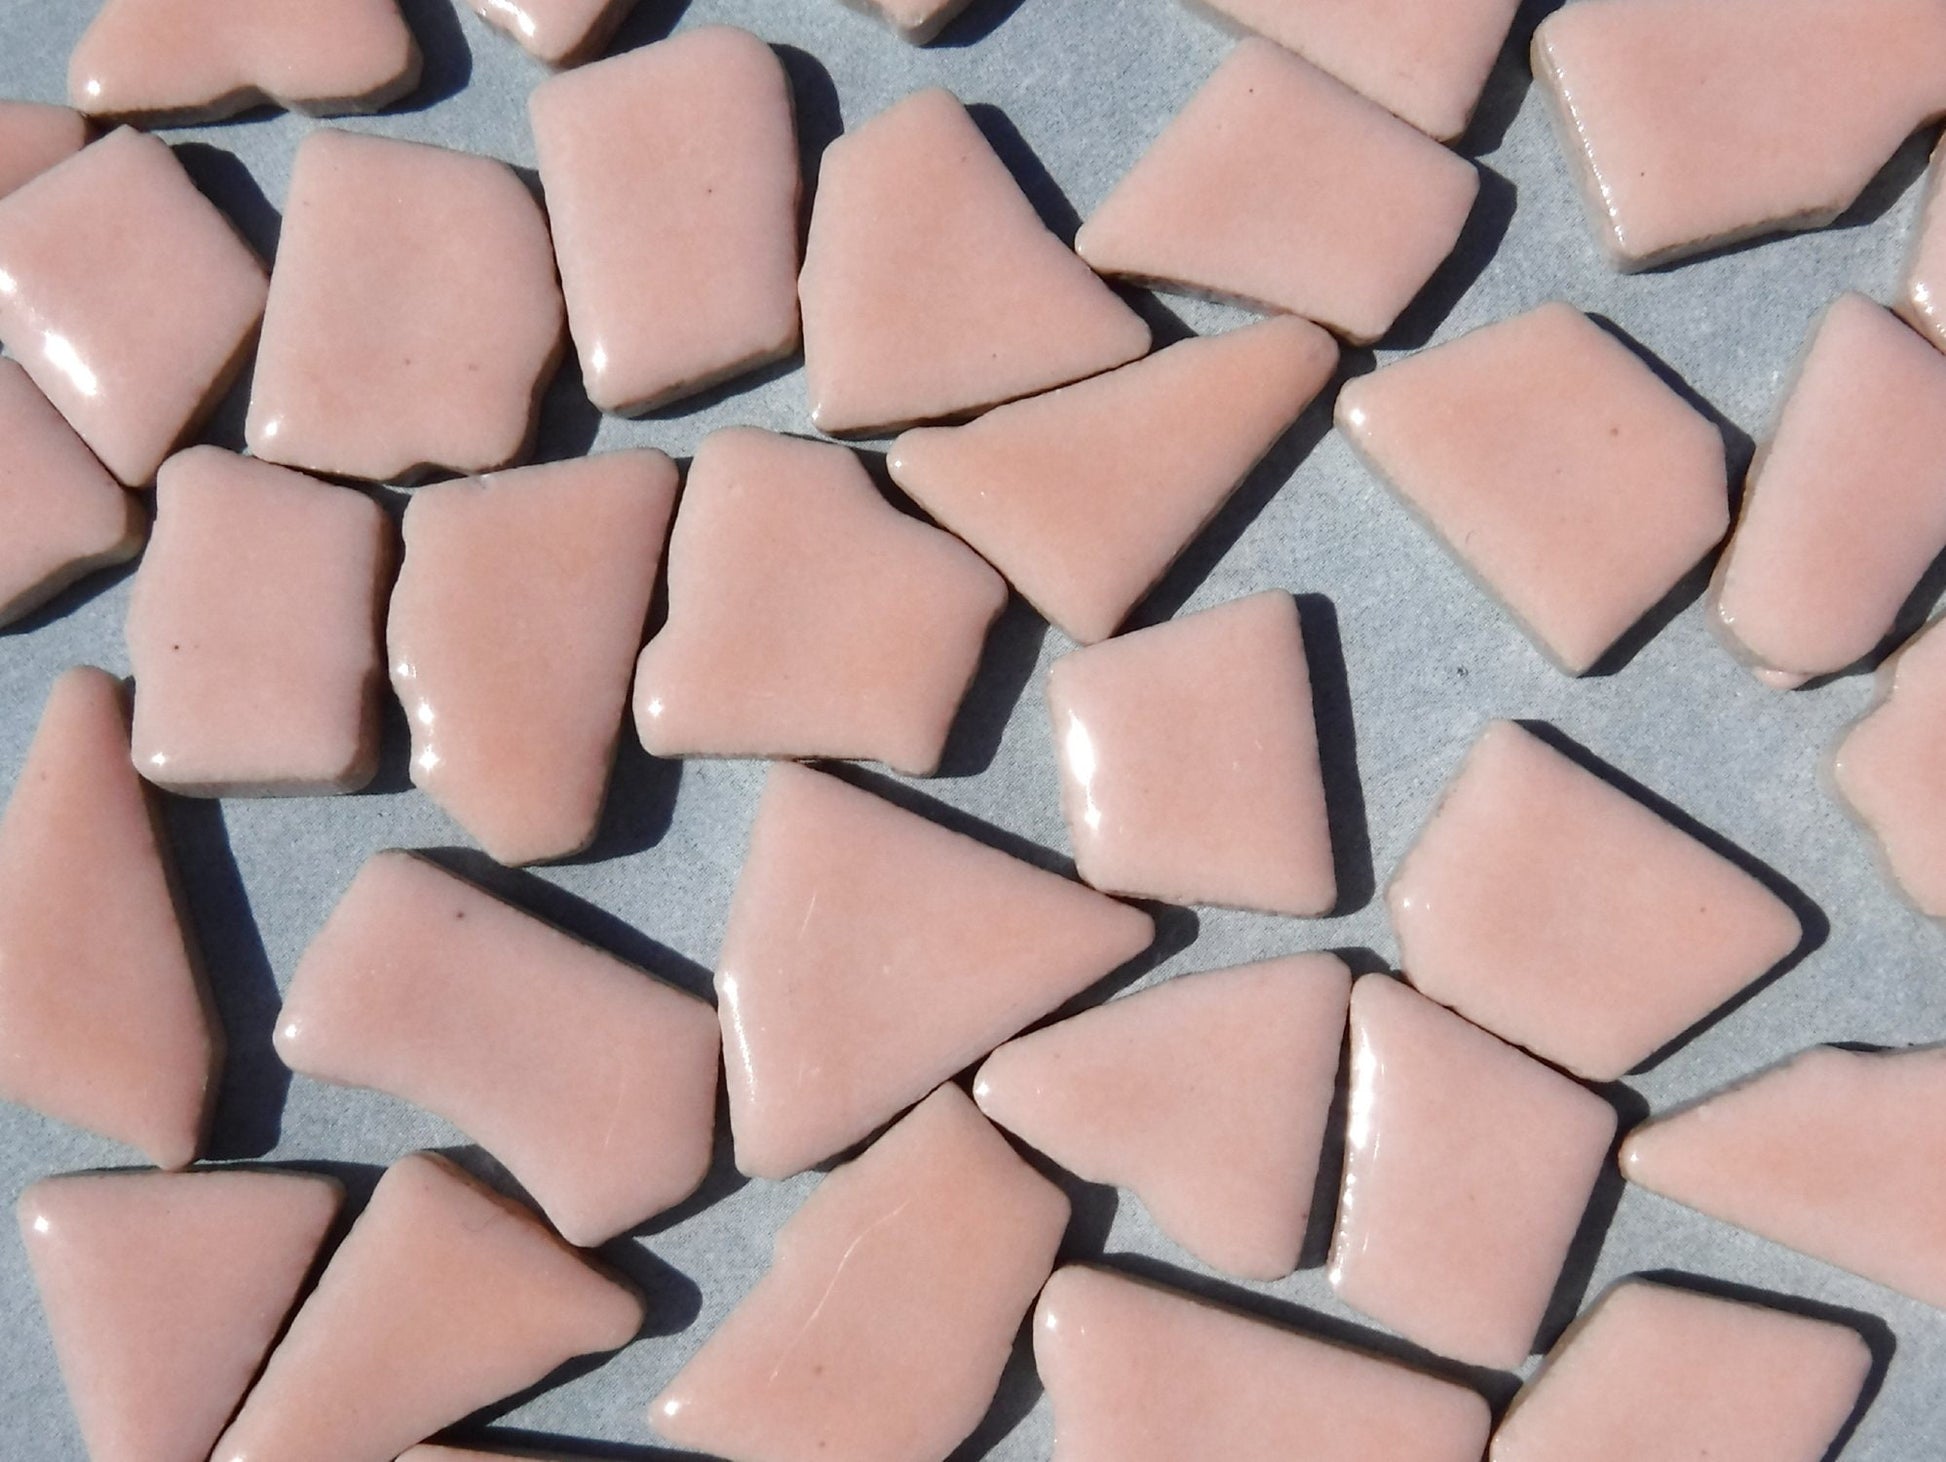 Pale Pink Mosaic Ceramic Tiles - Jigsaw Puzzle Shaped Pieces - Half Pound - Assorted Sizes Random Shapes